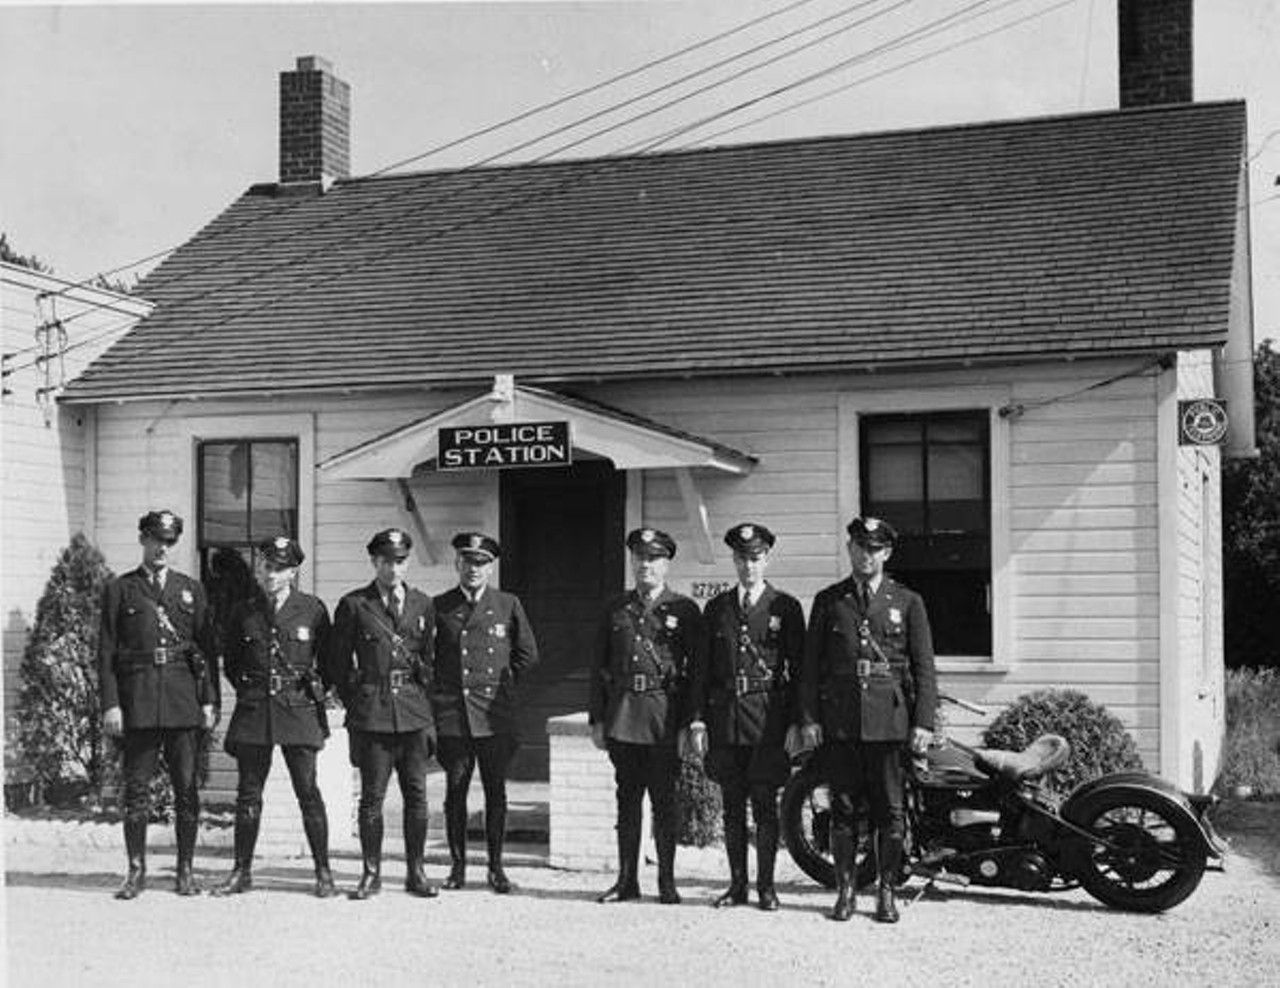  Westlake Police Department, 1941 